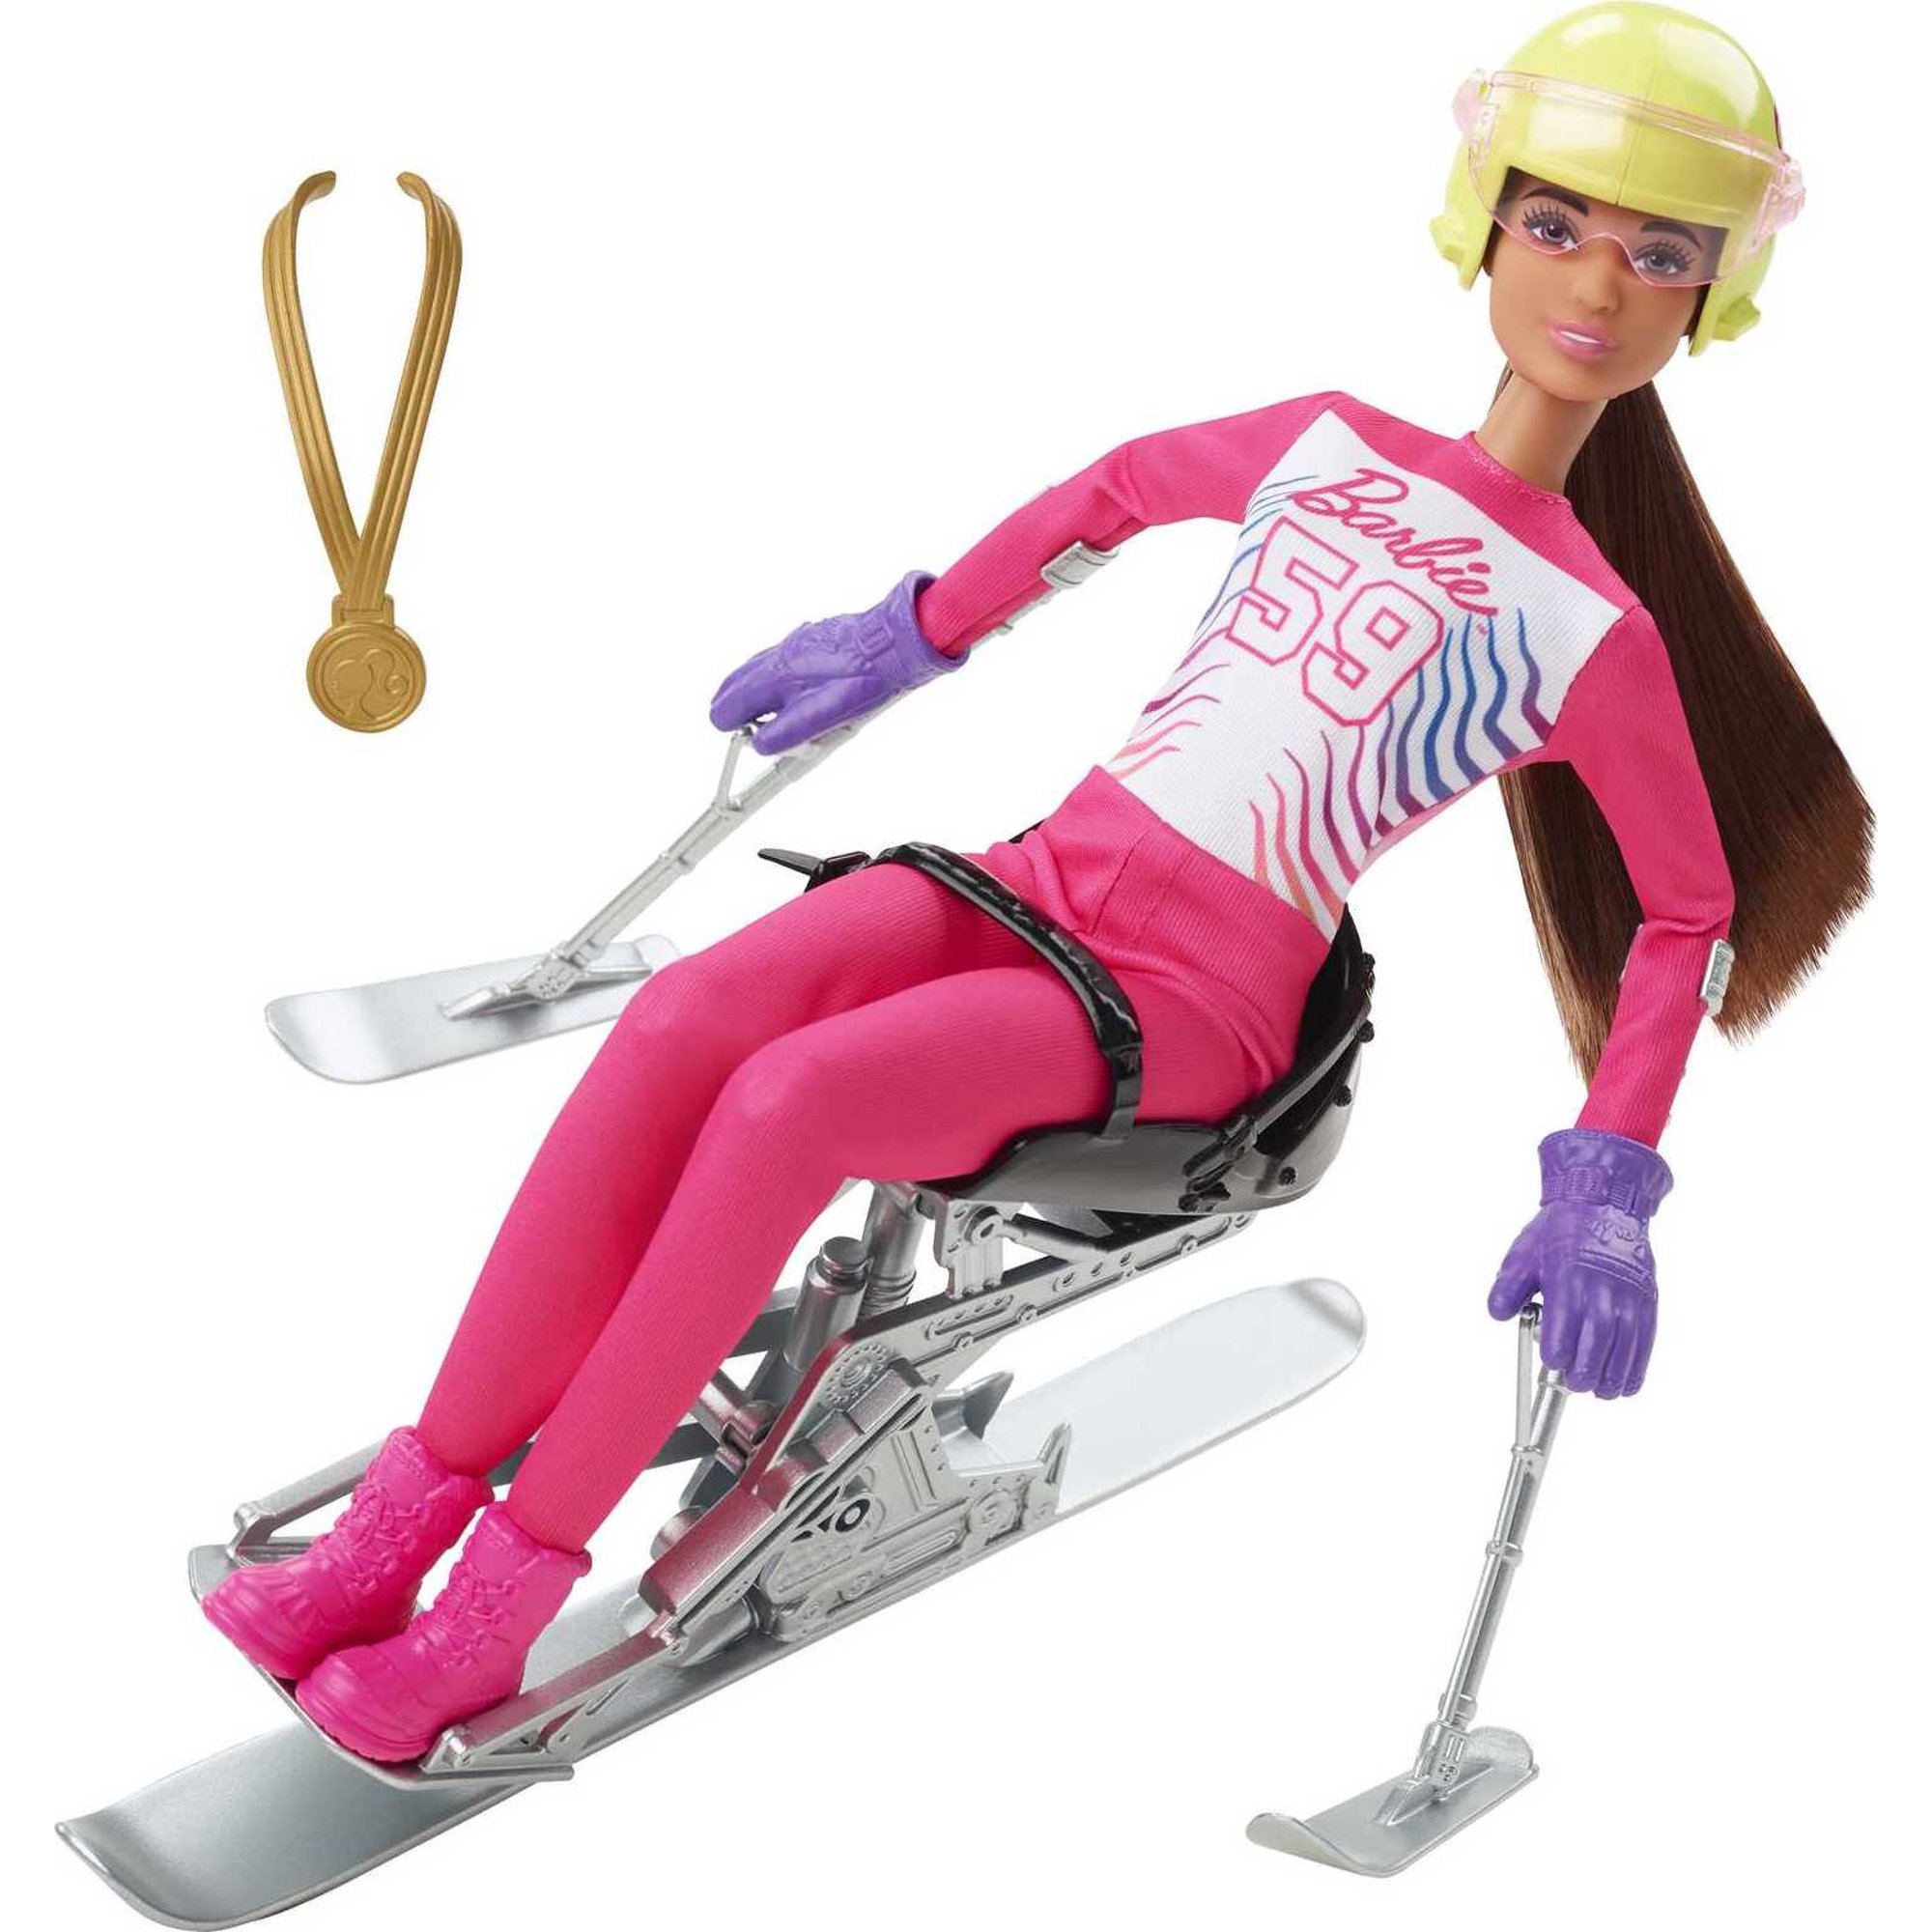 Barbie Career Winter Sports Para Alpine Skier Doll with Helmet, Gloves & Sit Ski